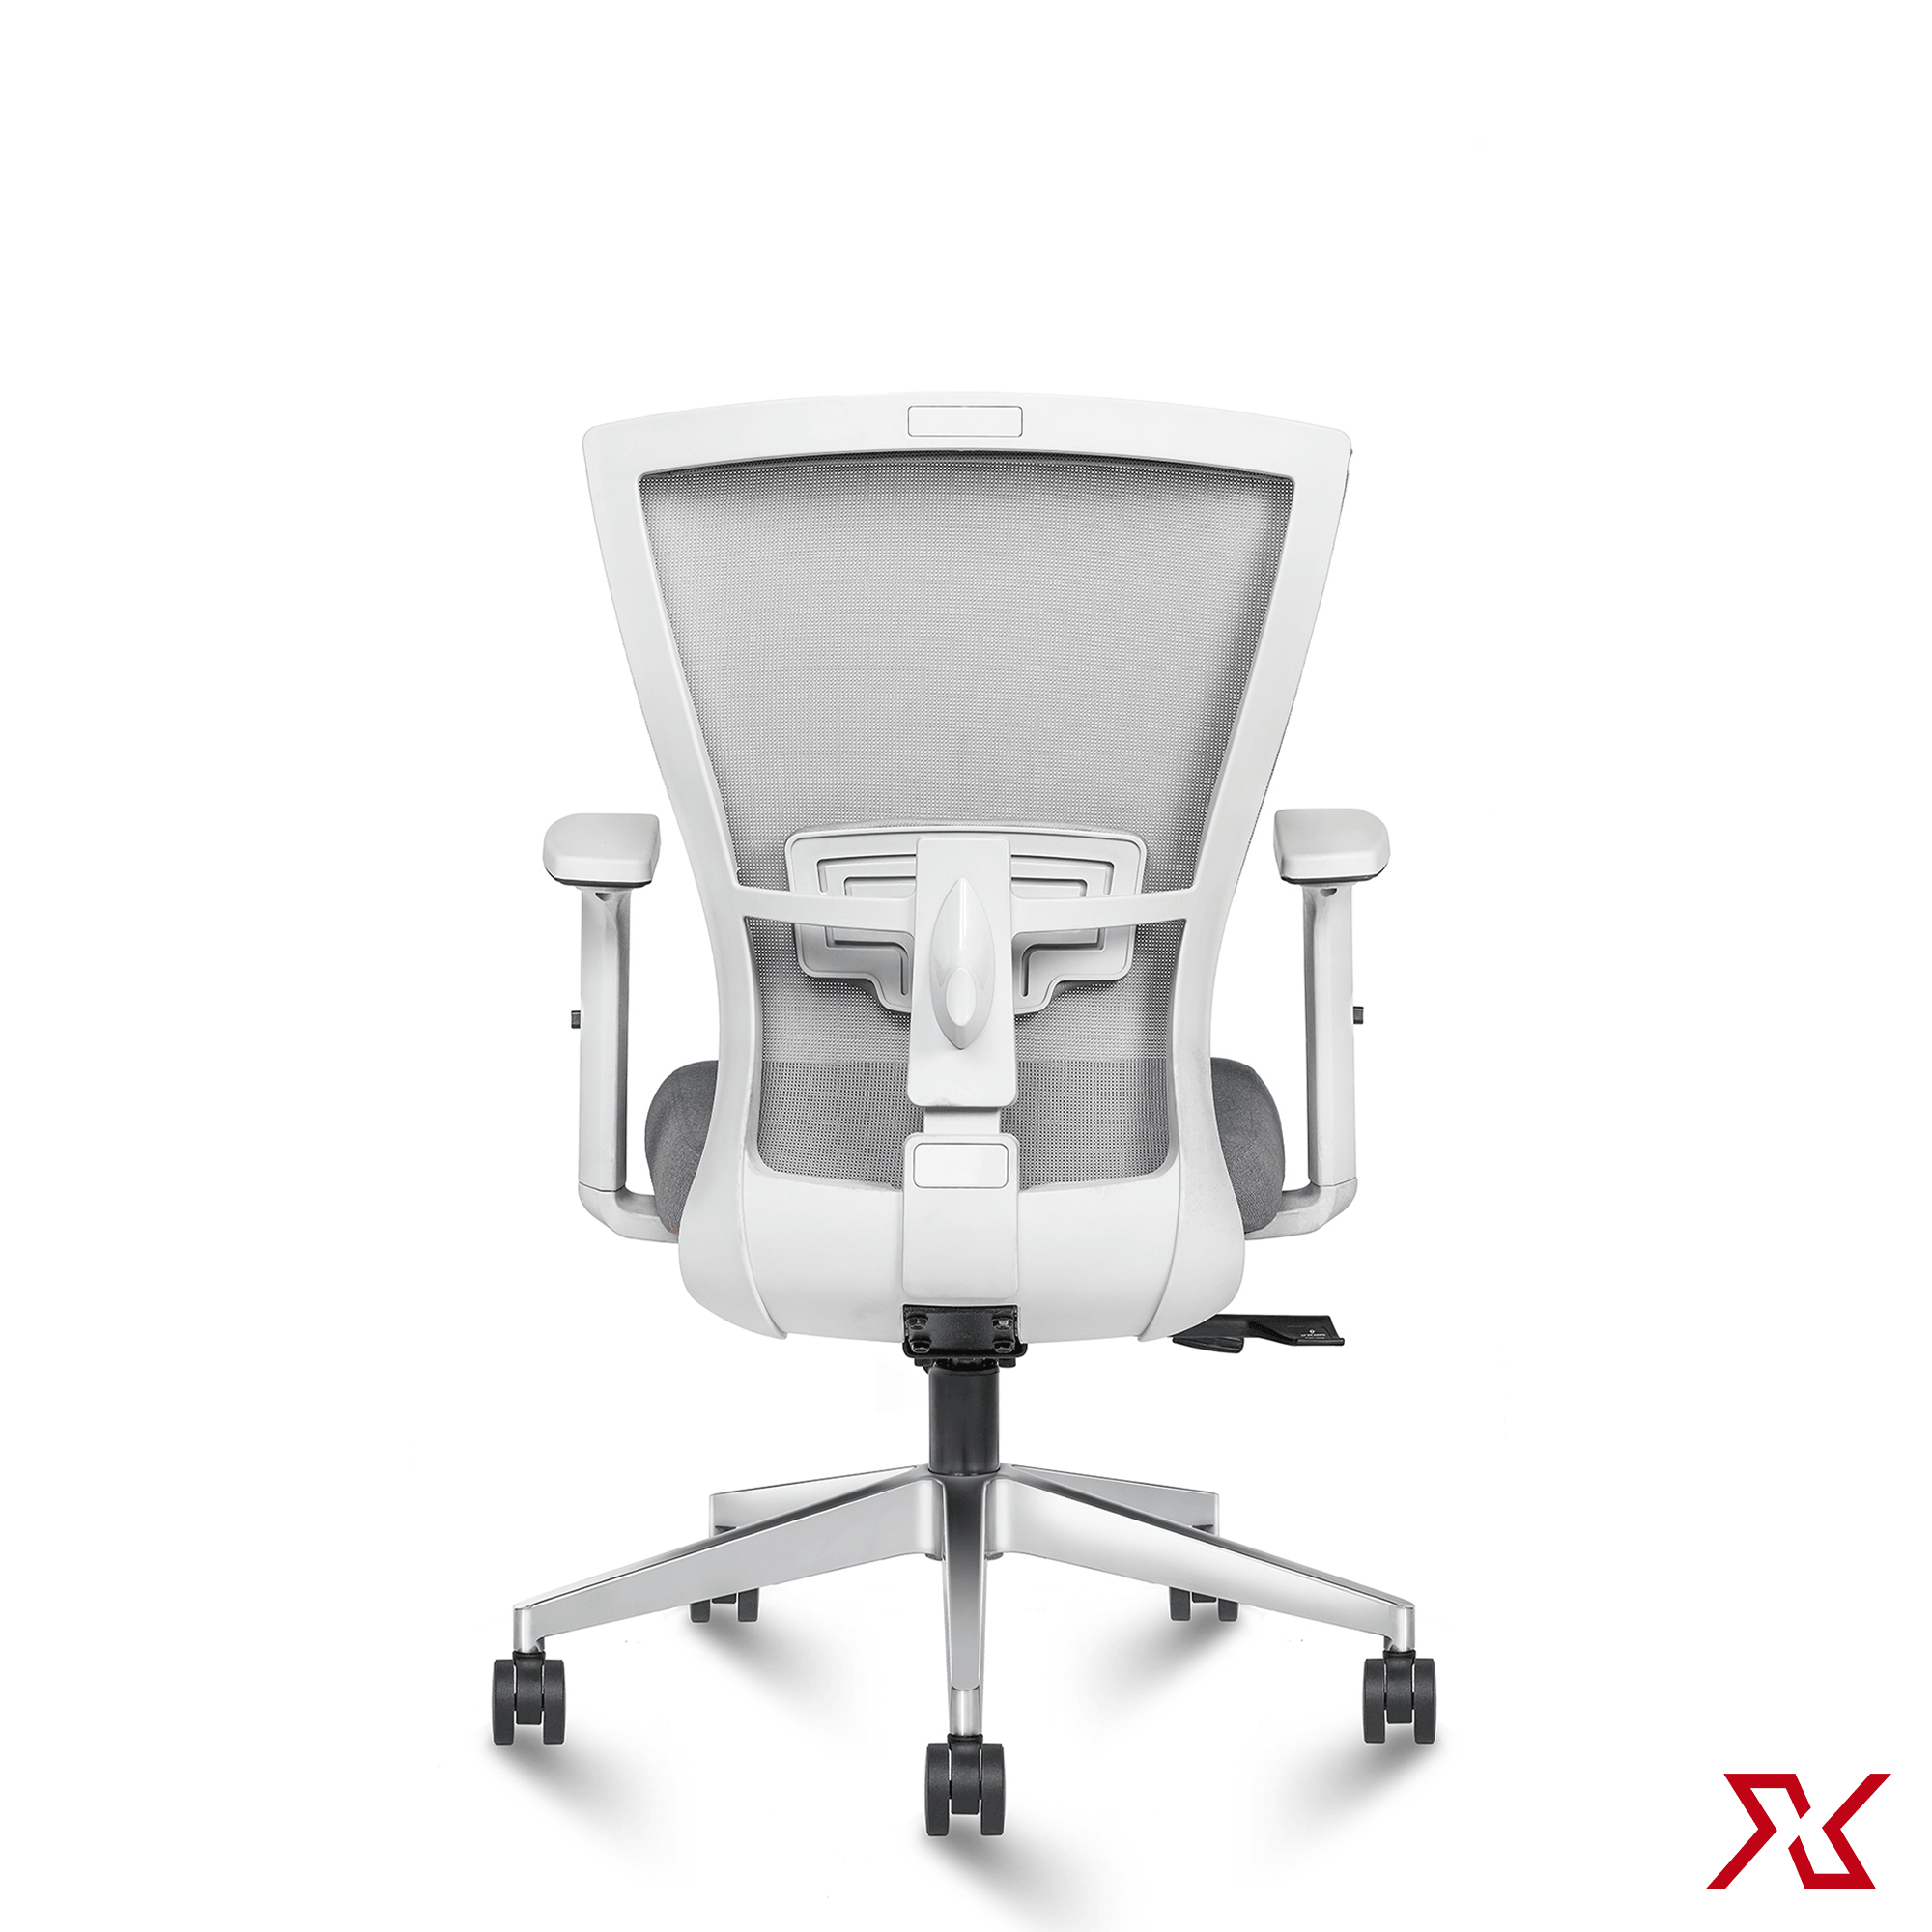 ZINC Medium Back (Grey Chair)